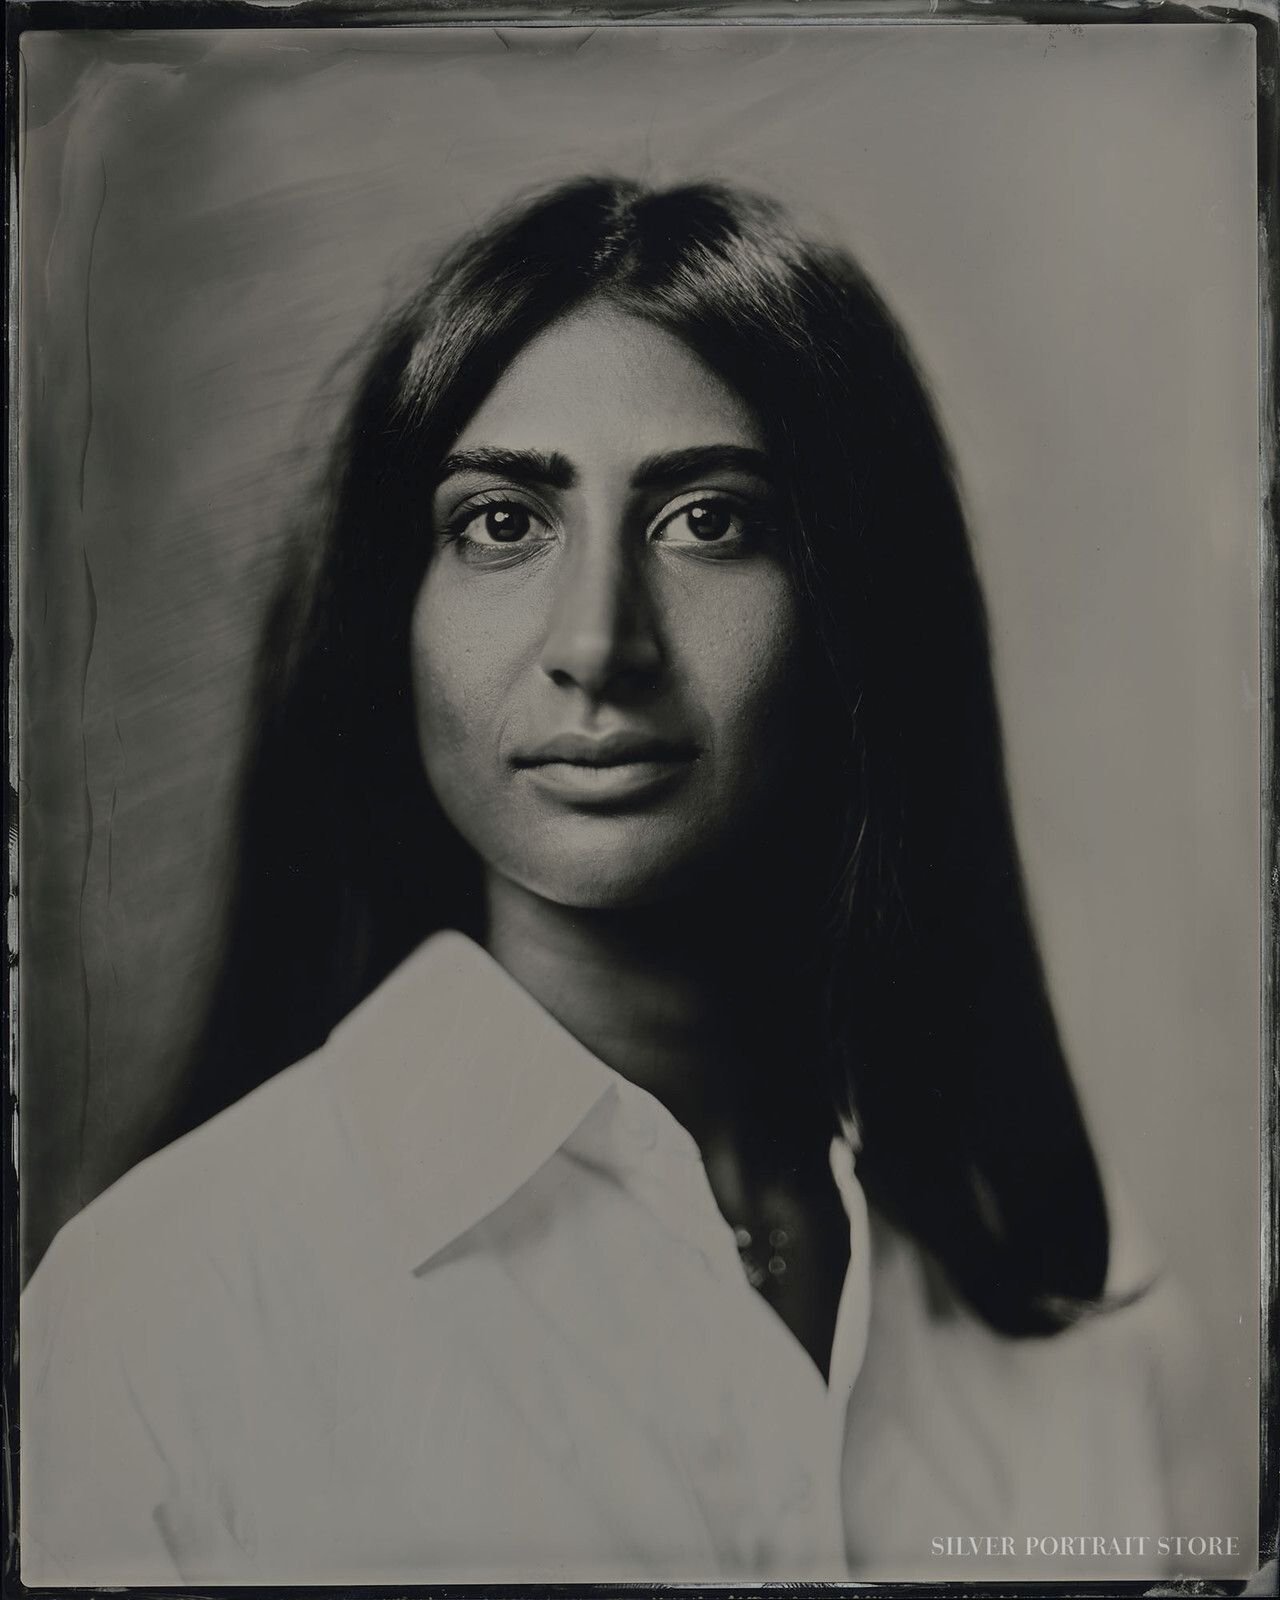 Sarah Kuwait-Silver Portrait Store-Wet plate collodion-Tintype 20 x 25 cm.